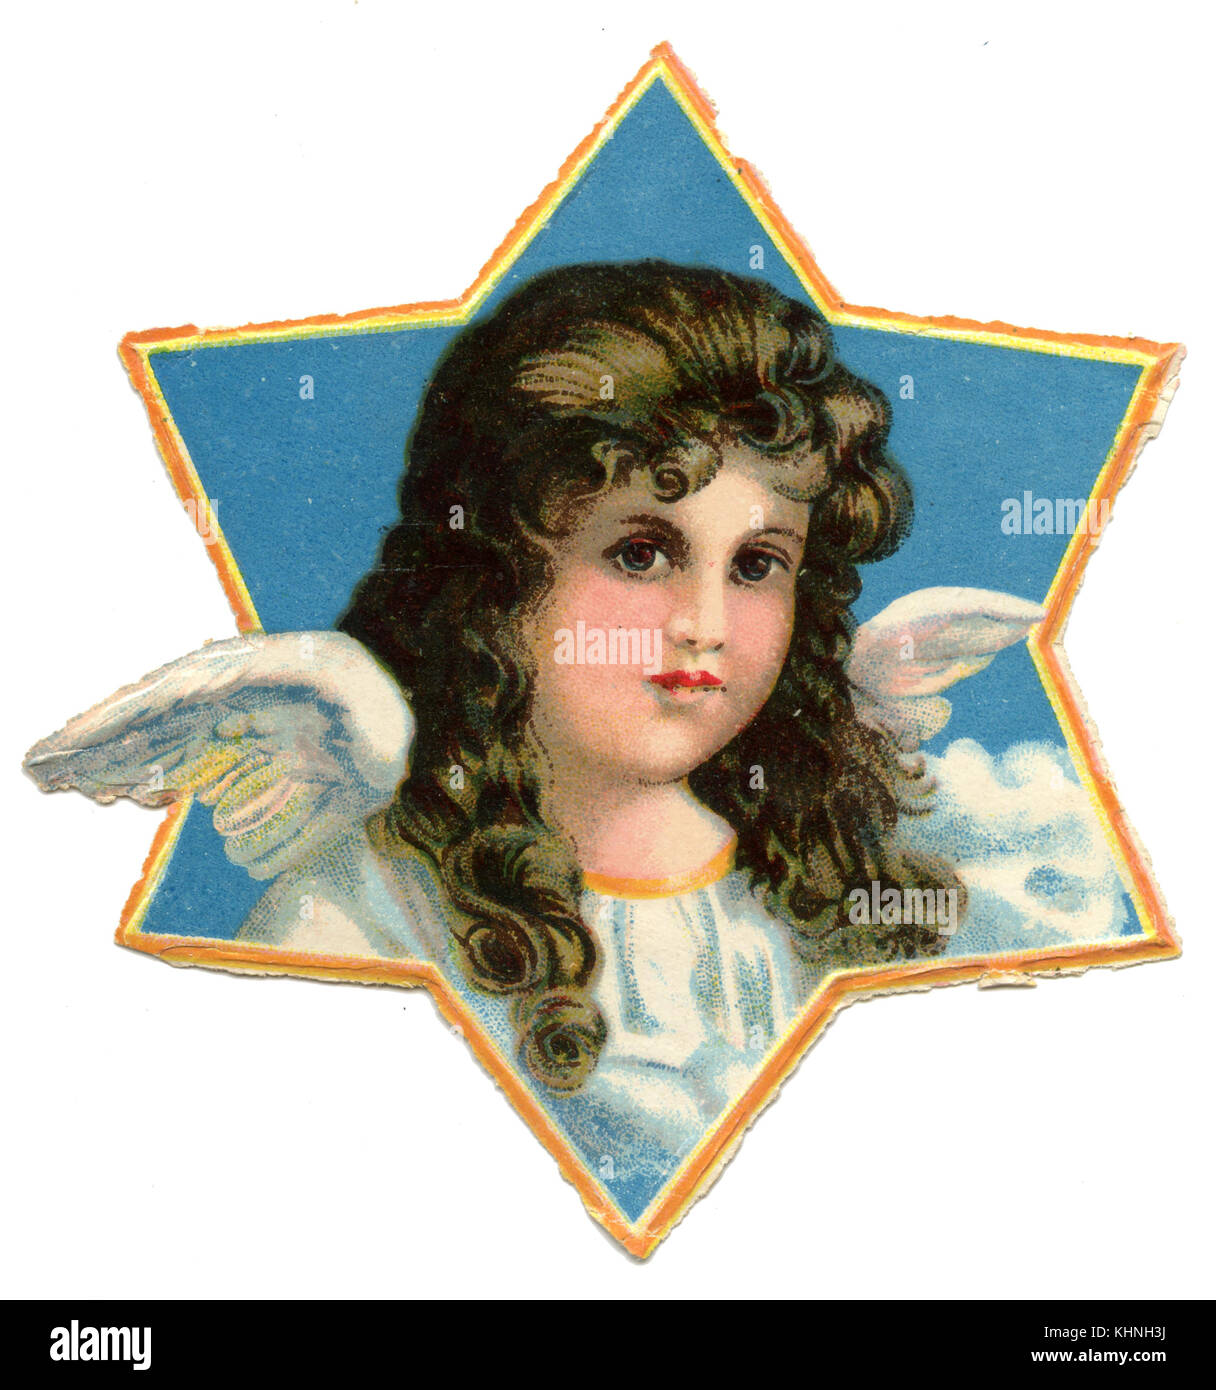 scrap: angel face in a star (Glanzbild, Oblate: Engelsgesicht im Stern) Stock Photo